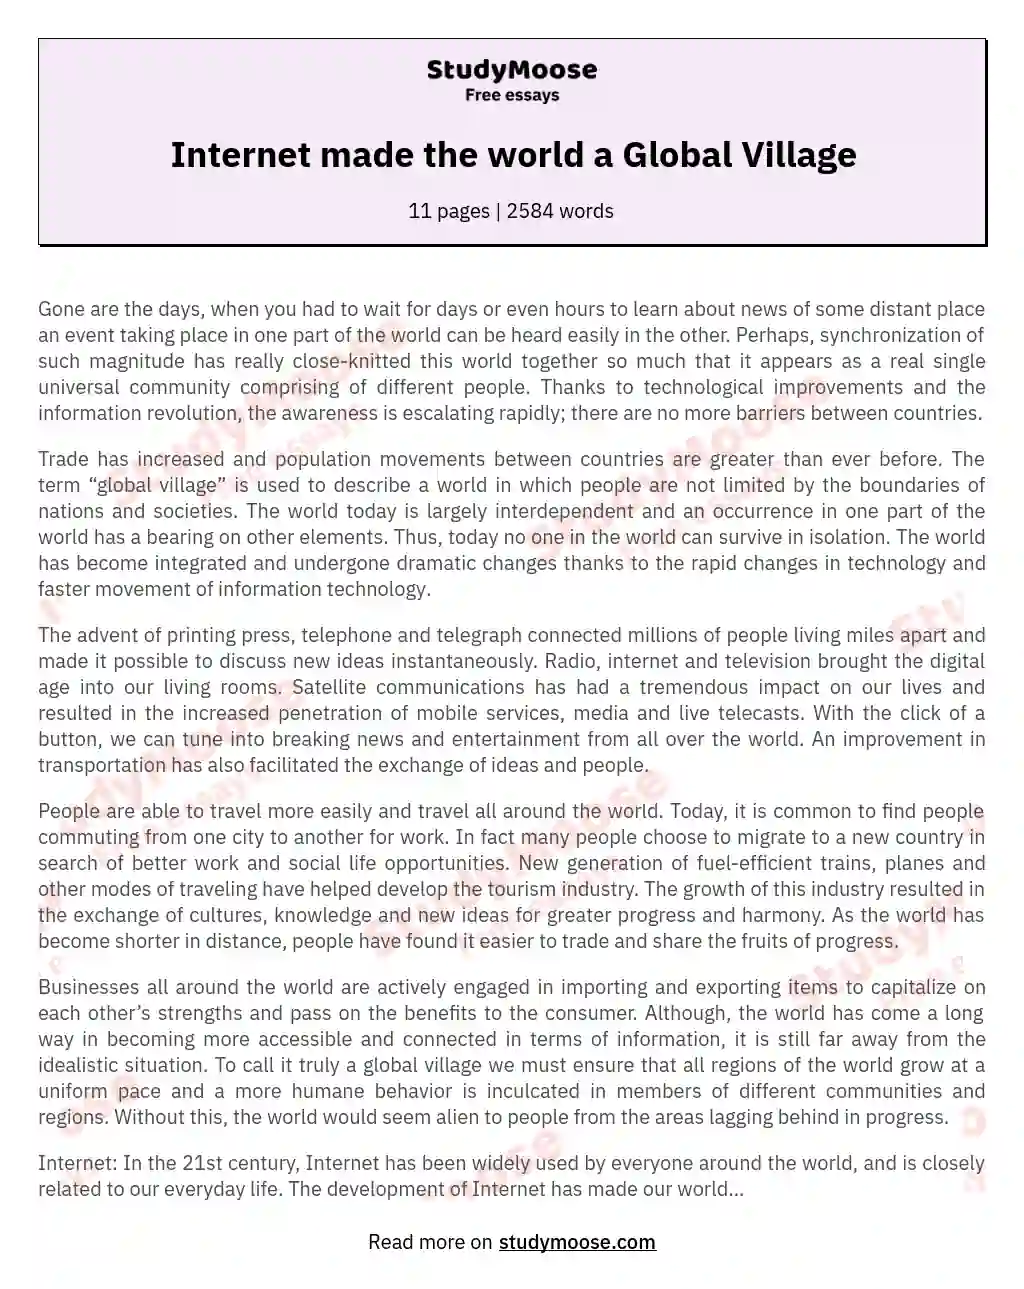 Internet made the world a Global Village essay